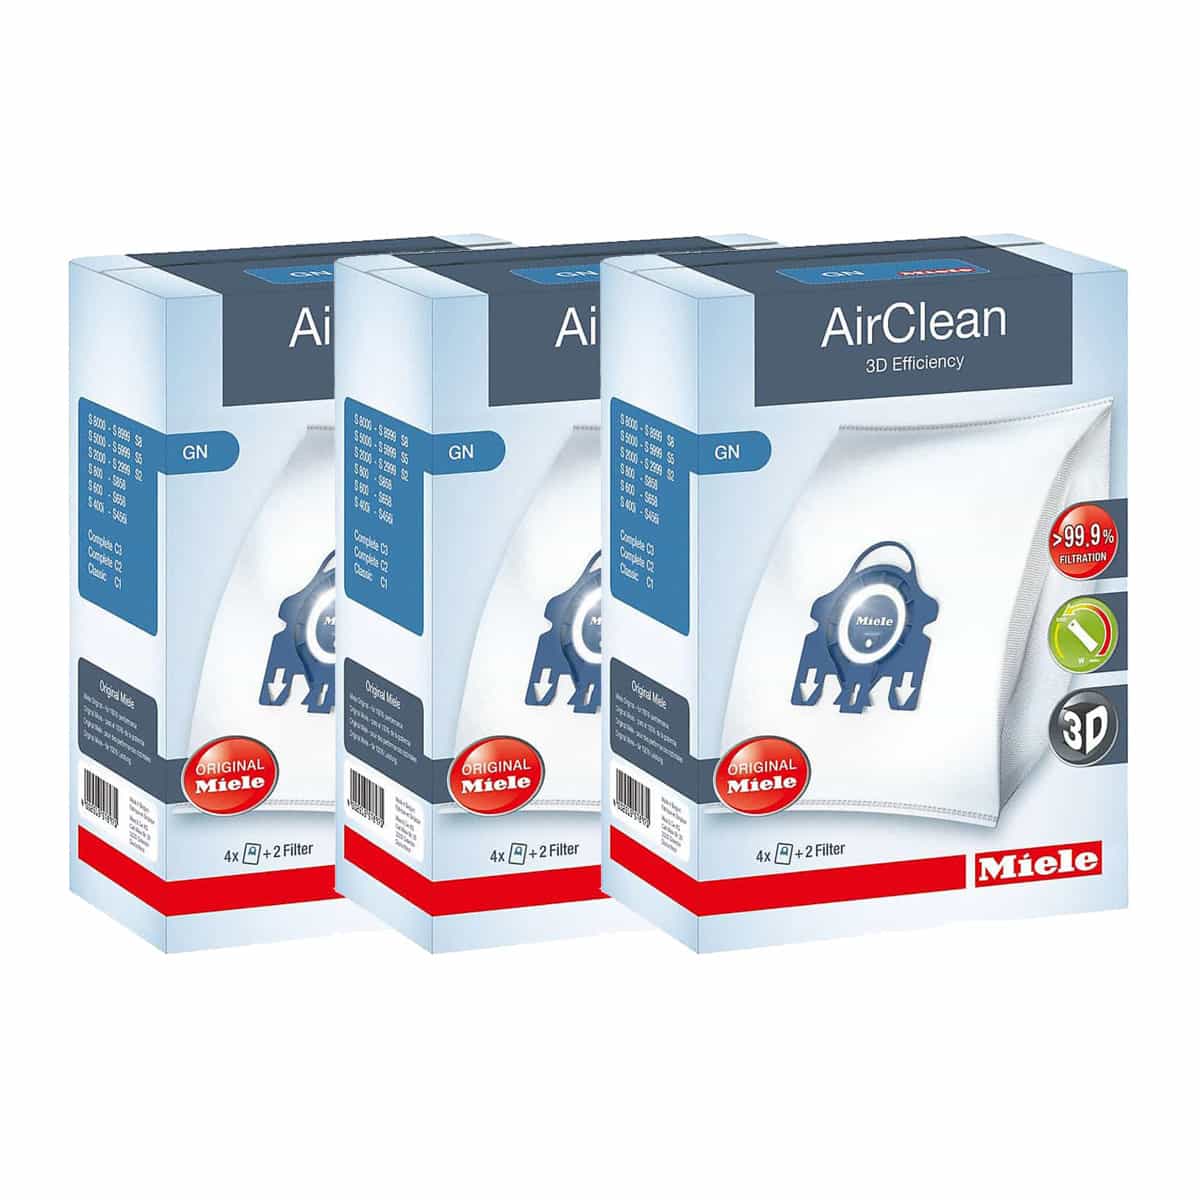 Miele Type GN AirClean 3D Efficiency Vacuum Bags 4 Bags & 2 Filters  10123210 | Avon Vacuums